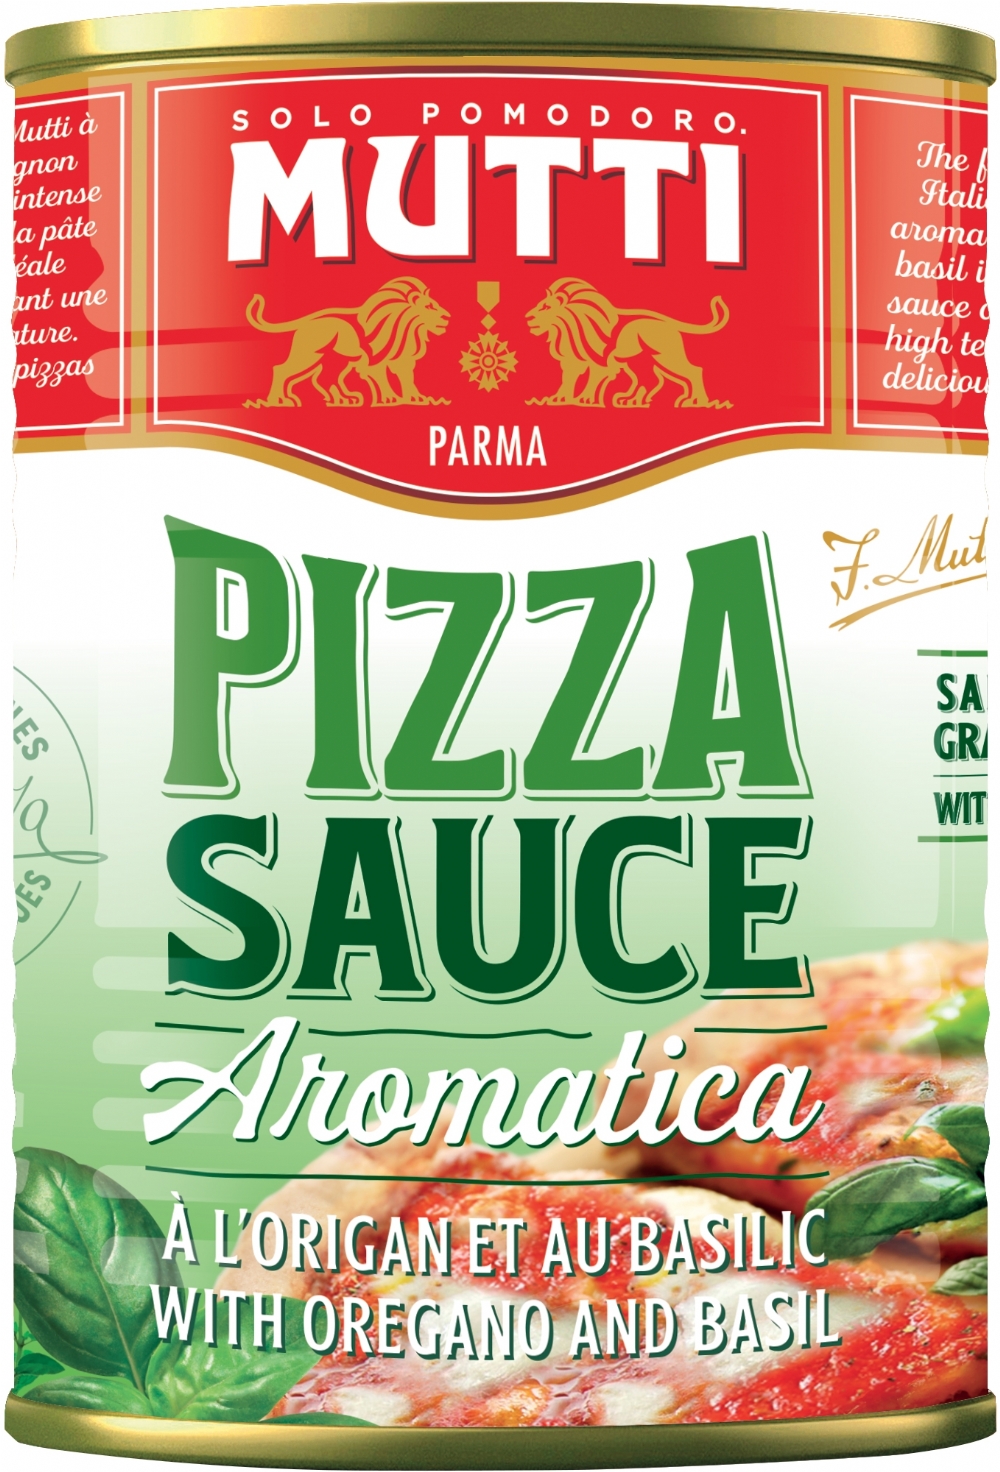 MUTTI Pizza Sauce Aromatica 400g